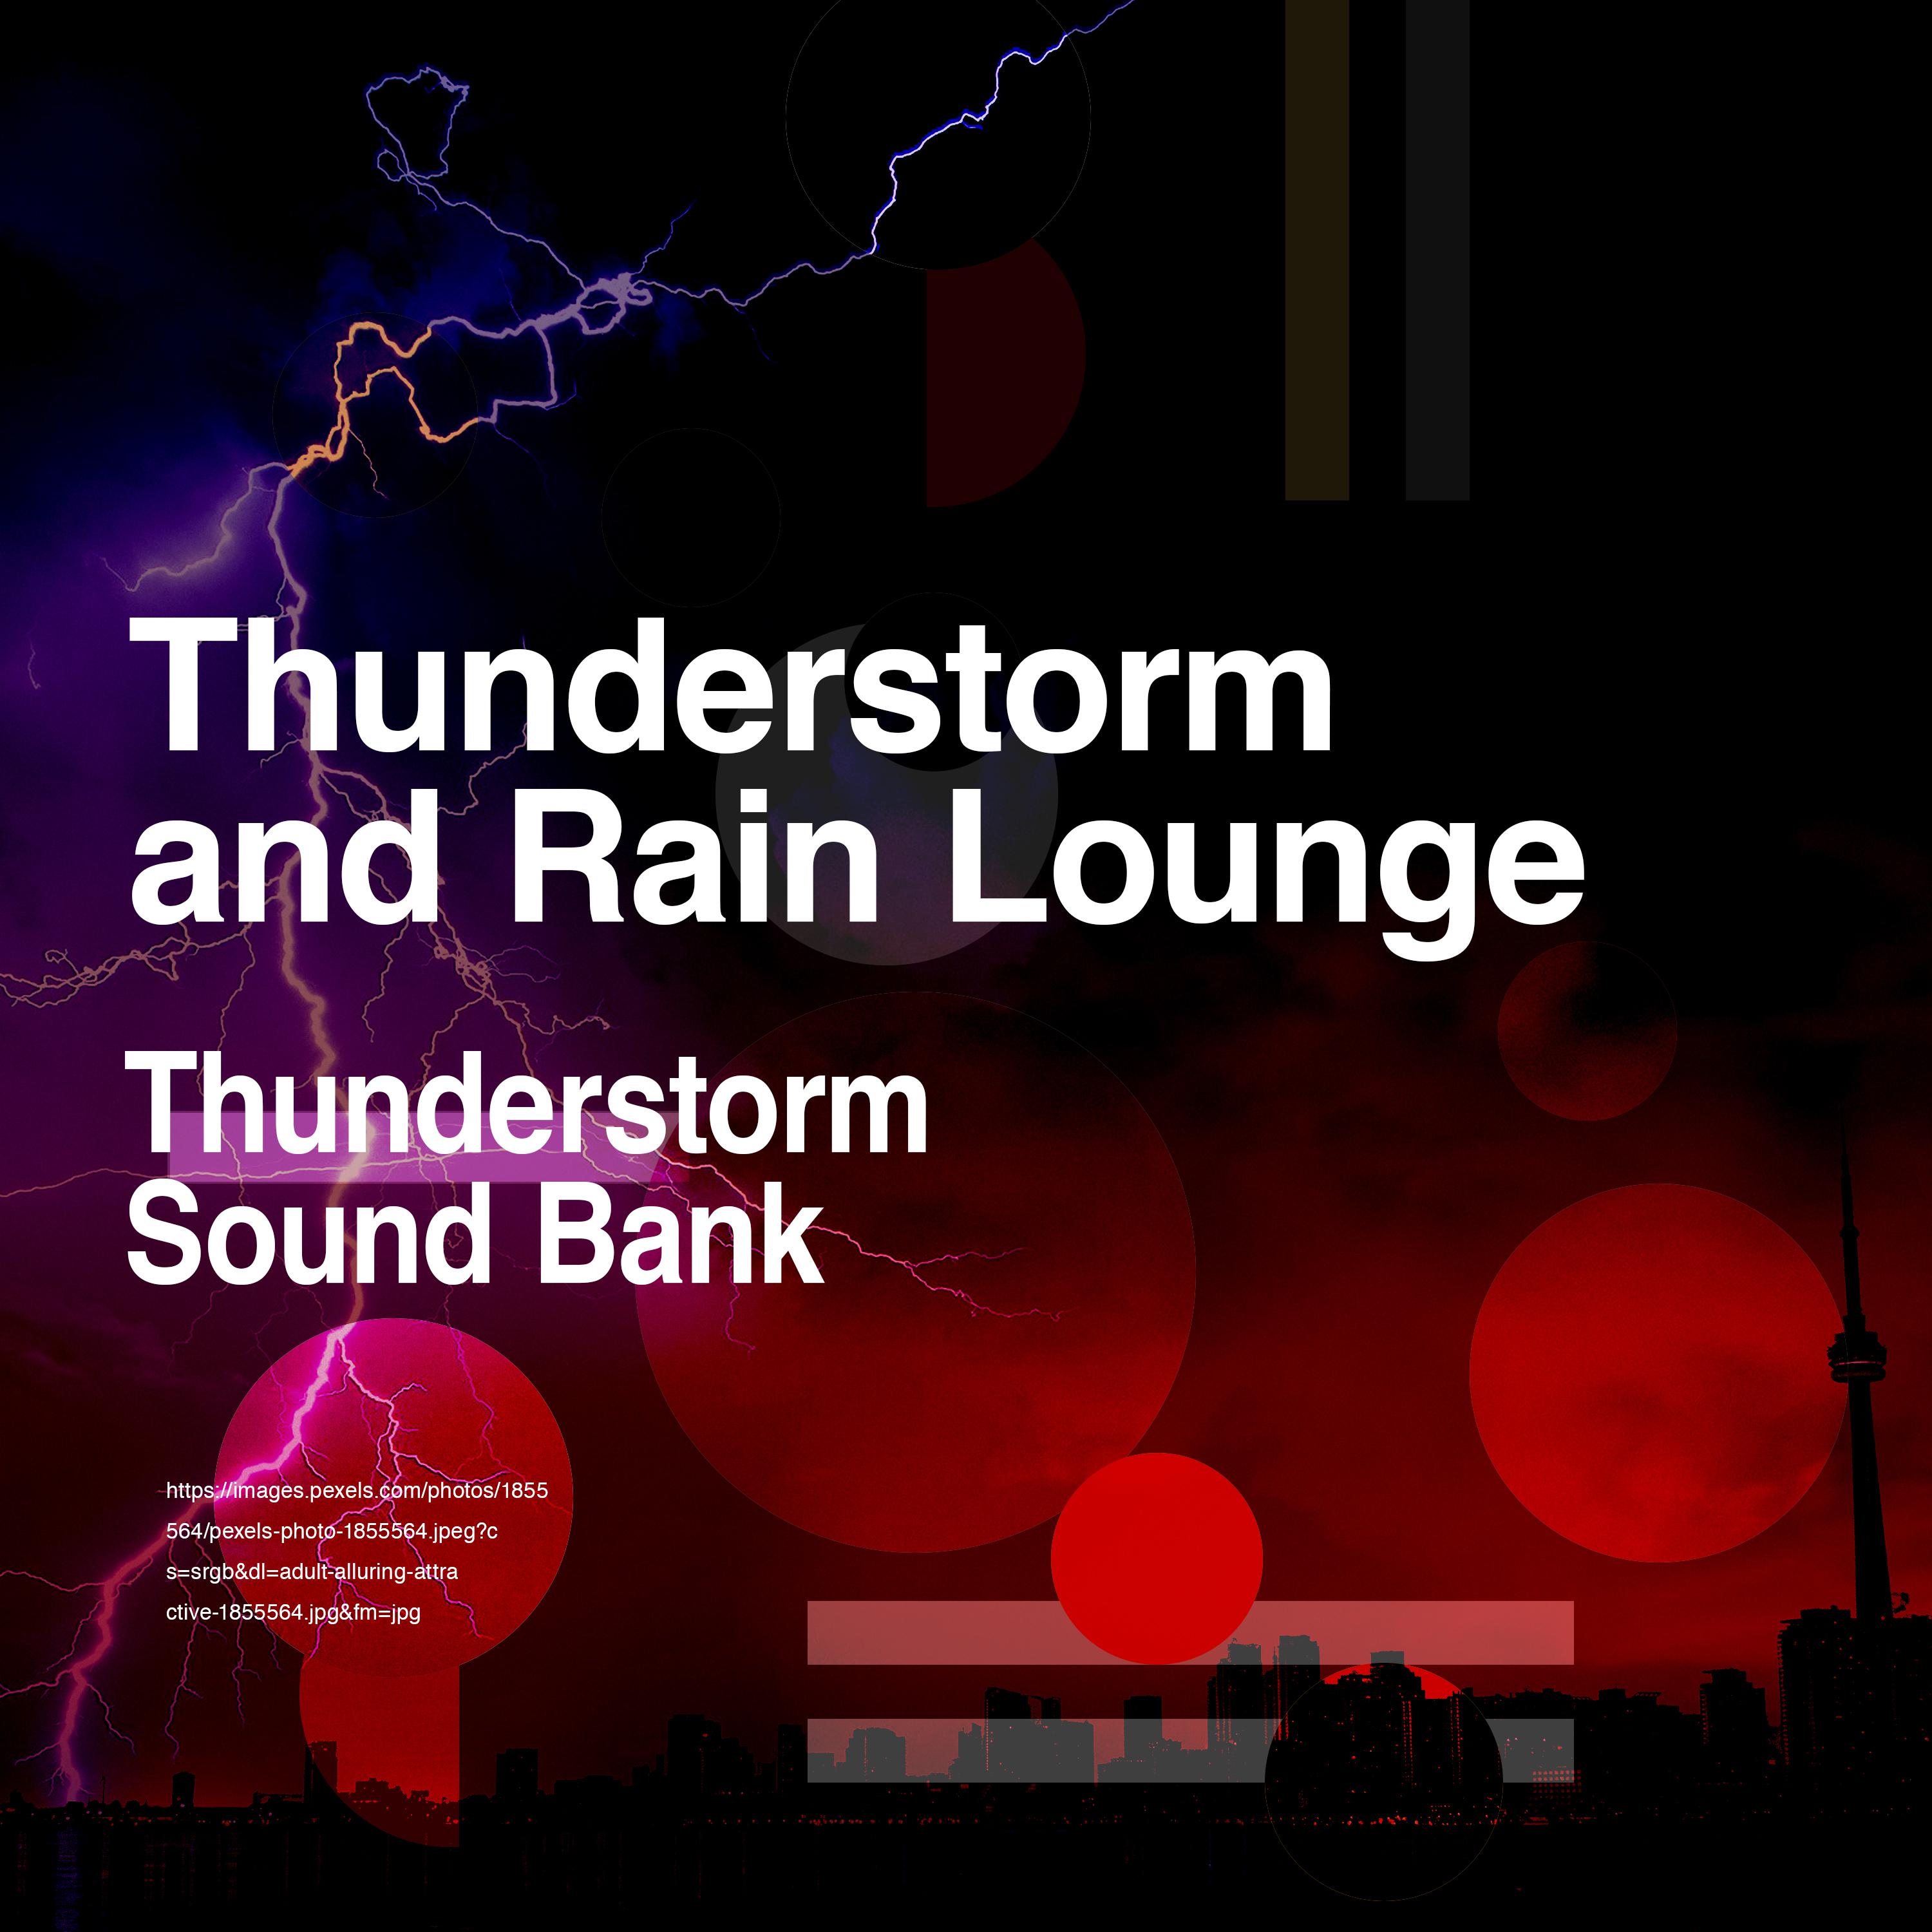 Thunderstorm and Rain Lounge